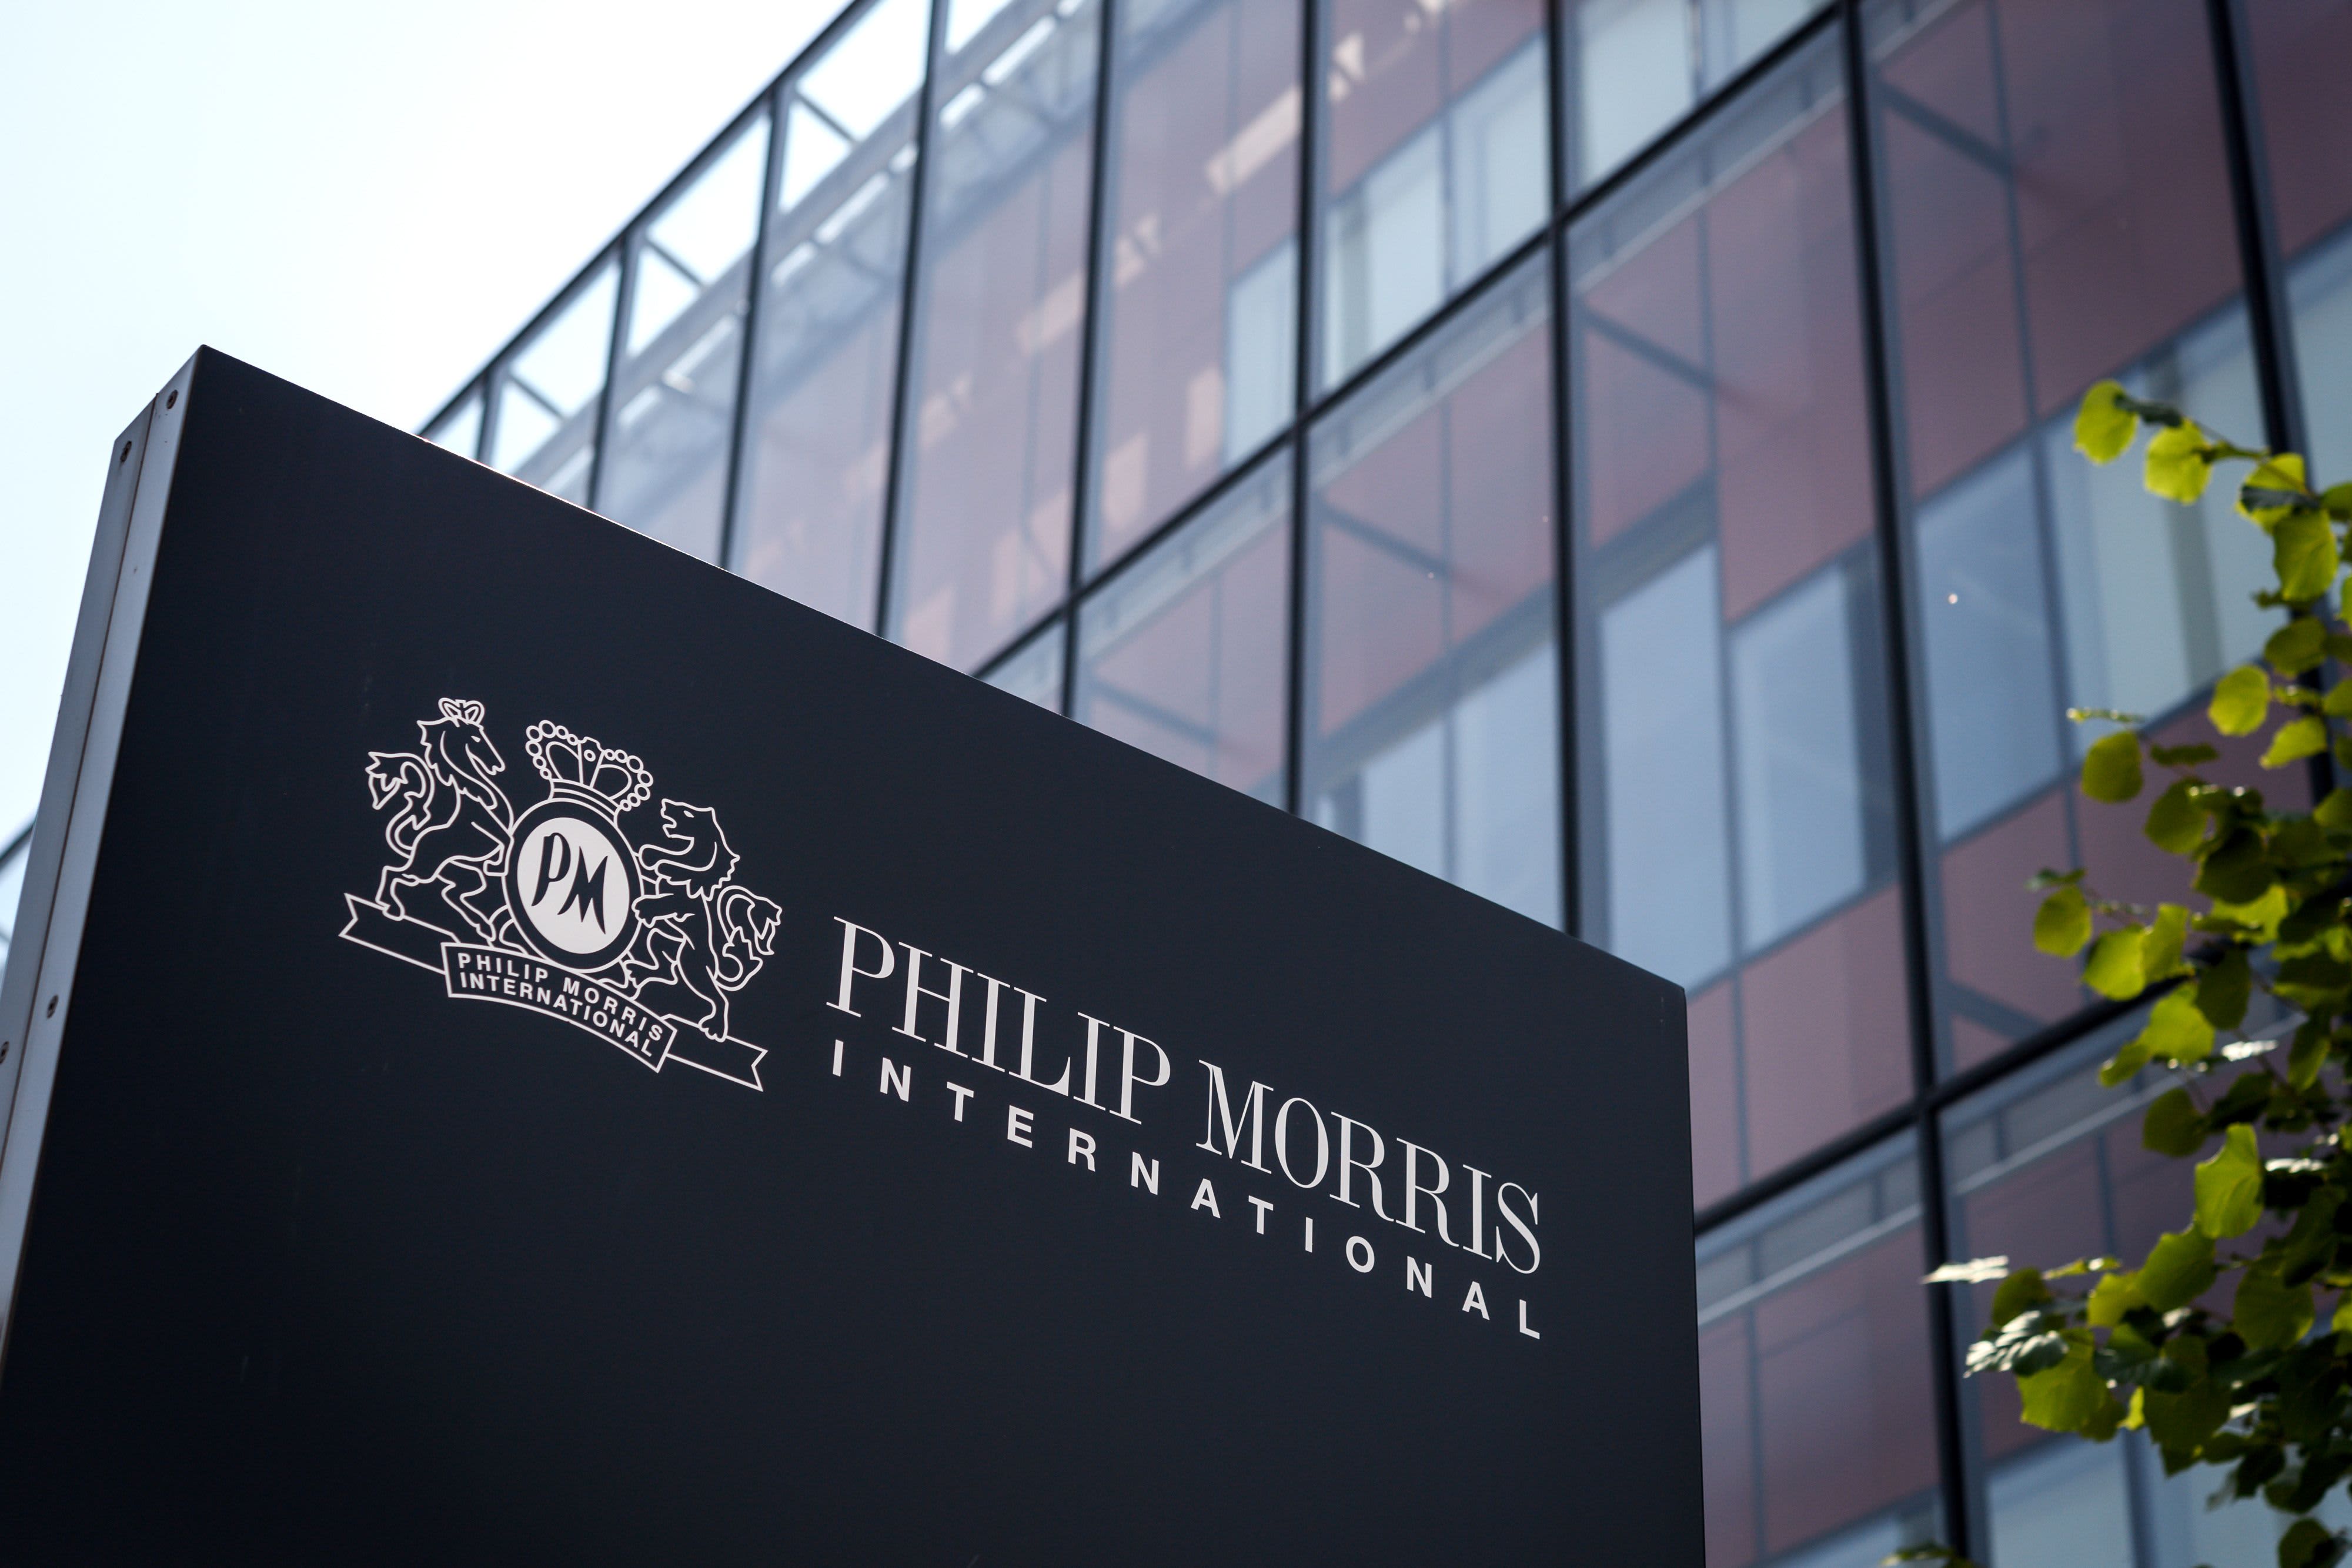 Goldman Sachs သည် Philip Morris ကို အဆင့်မြှင့်တင်ပြီး ဆေးလိပ်ငွေ့ကင်းစင်သော အခြားနည်းလမ်းများဖြင့် US တွင် တိုးချဲ့မှုကို ကိုးကားဖော်ပြသည်။